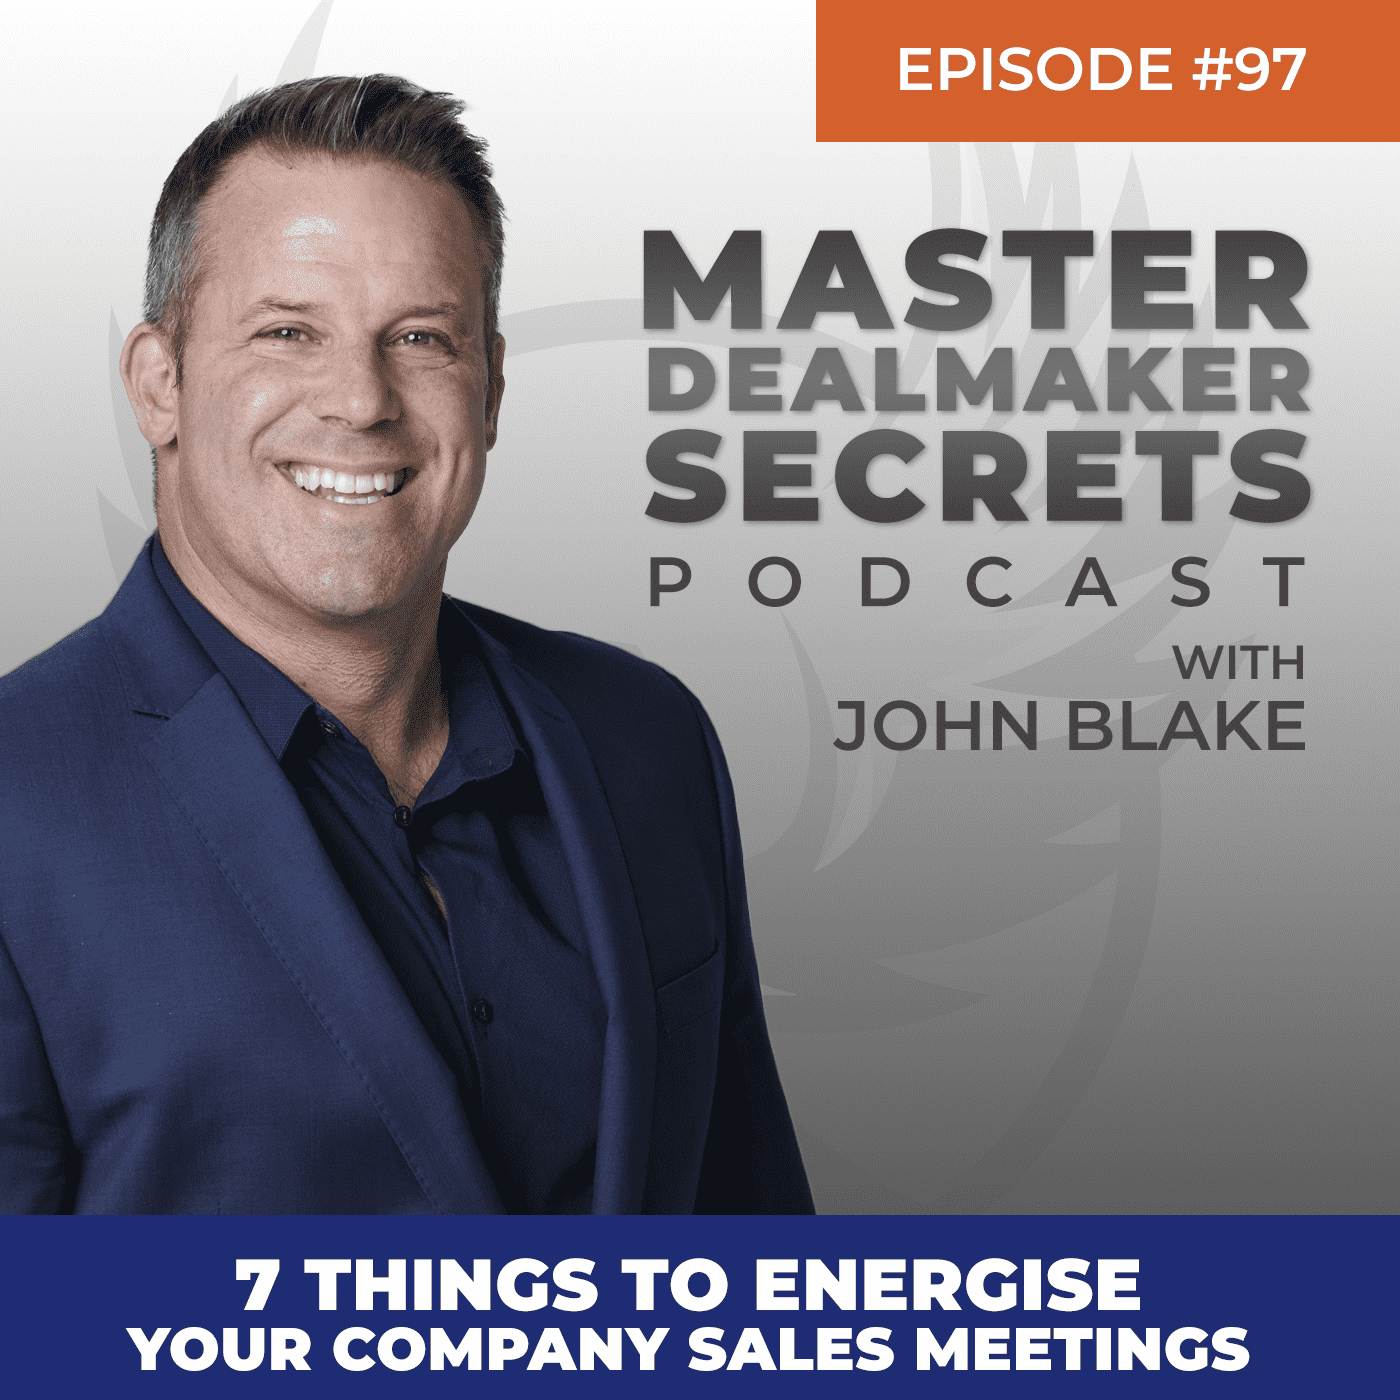 John Blake 7 Things to Energise Your Company Sales Meetings